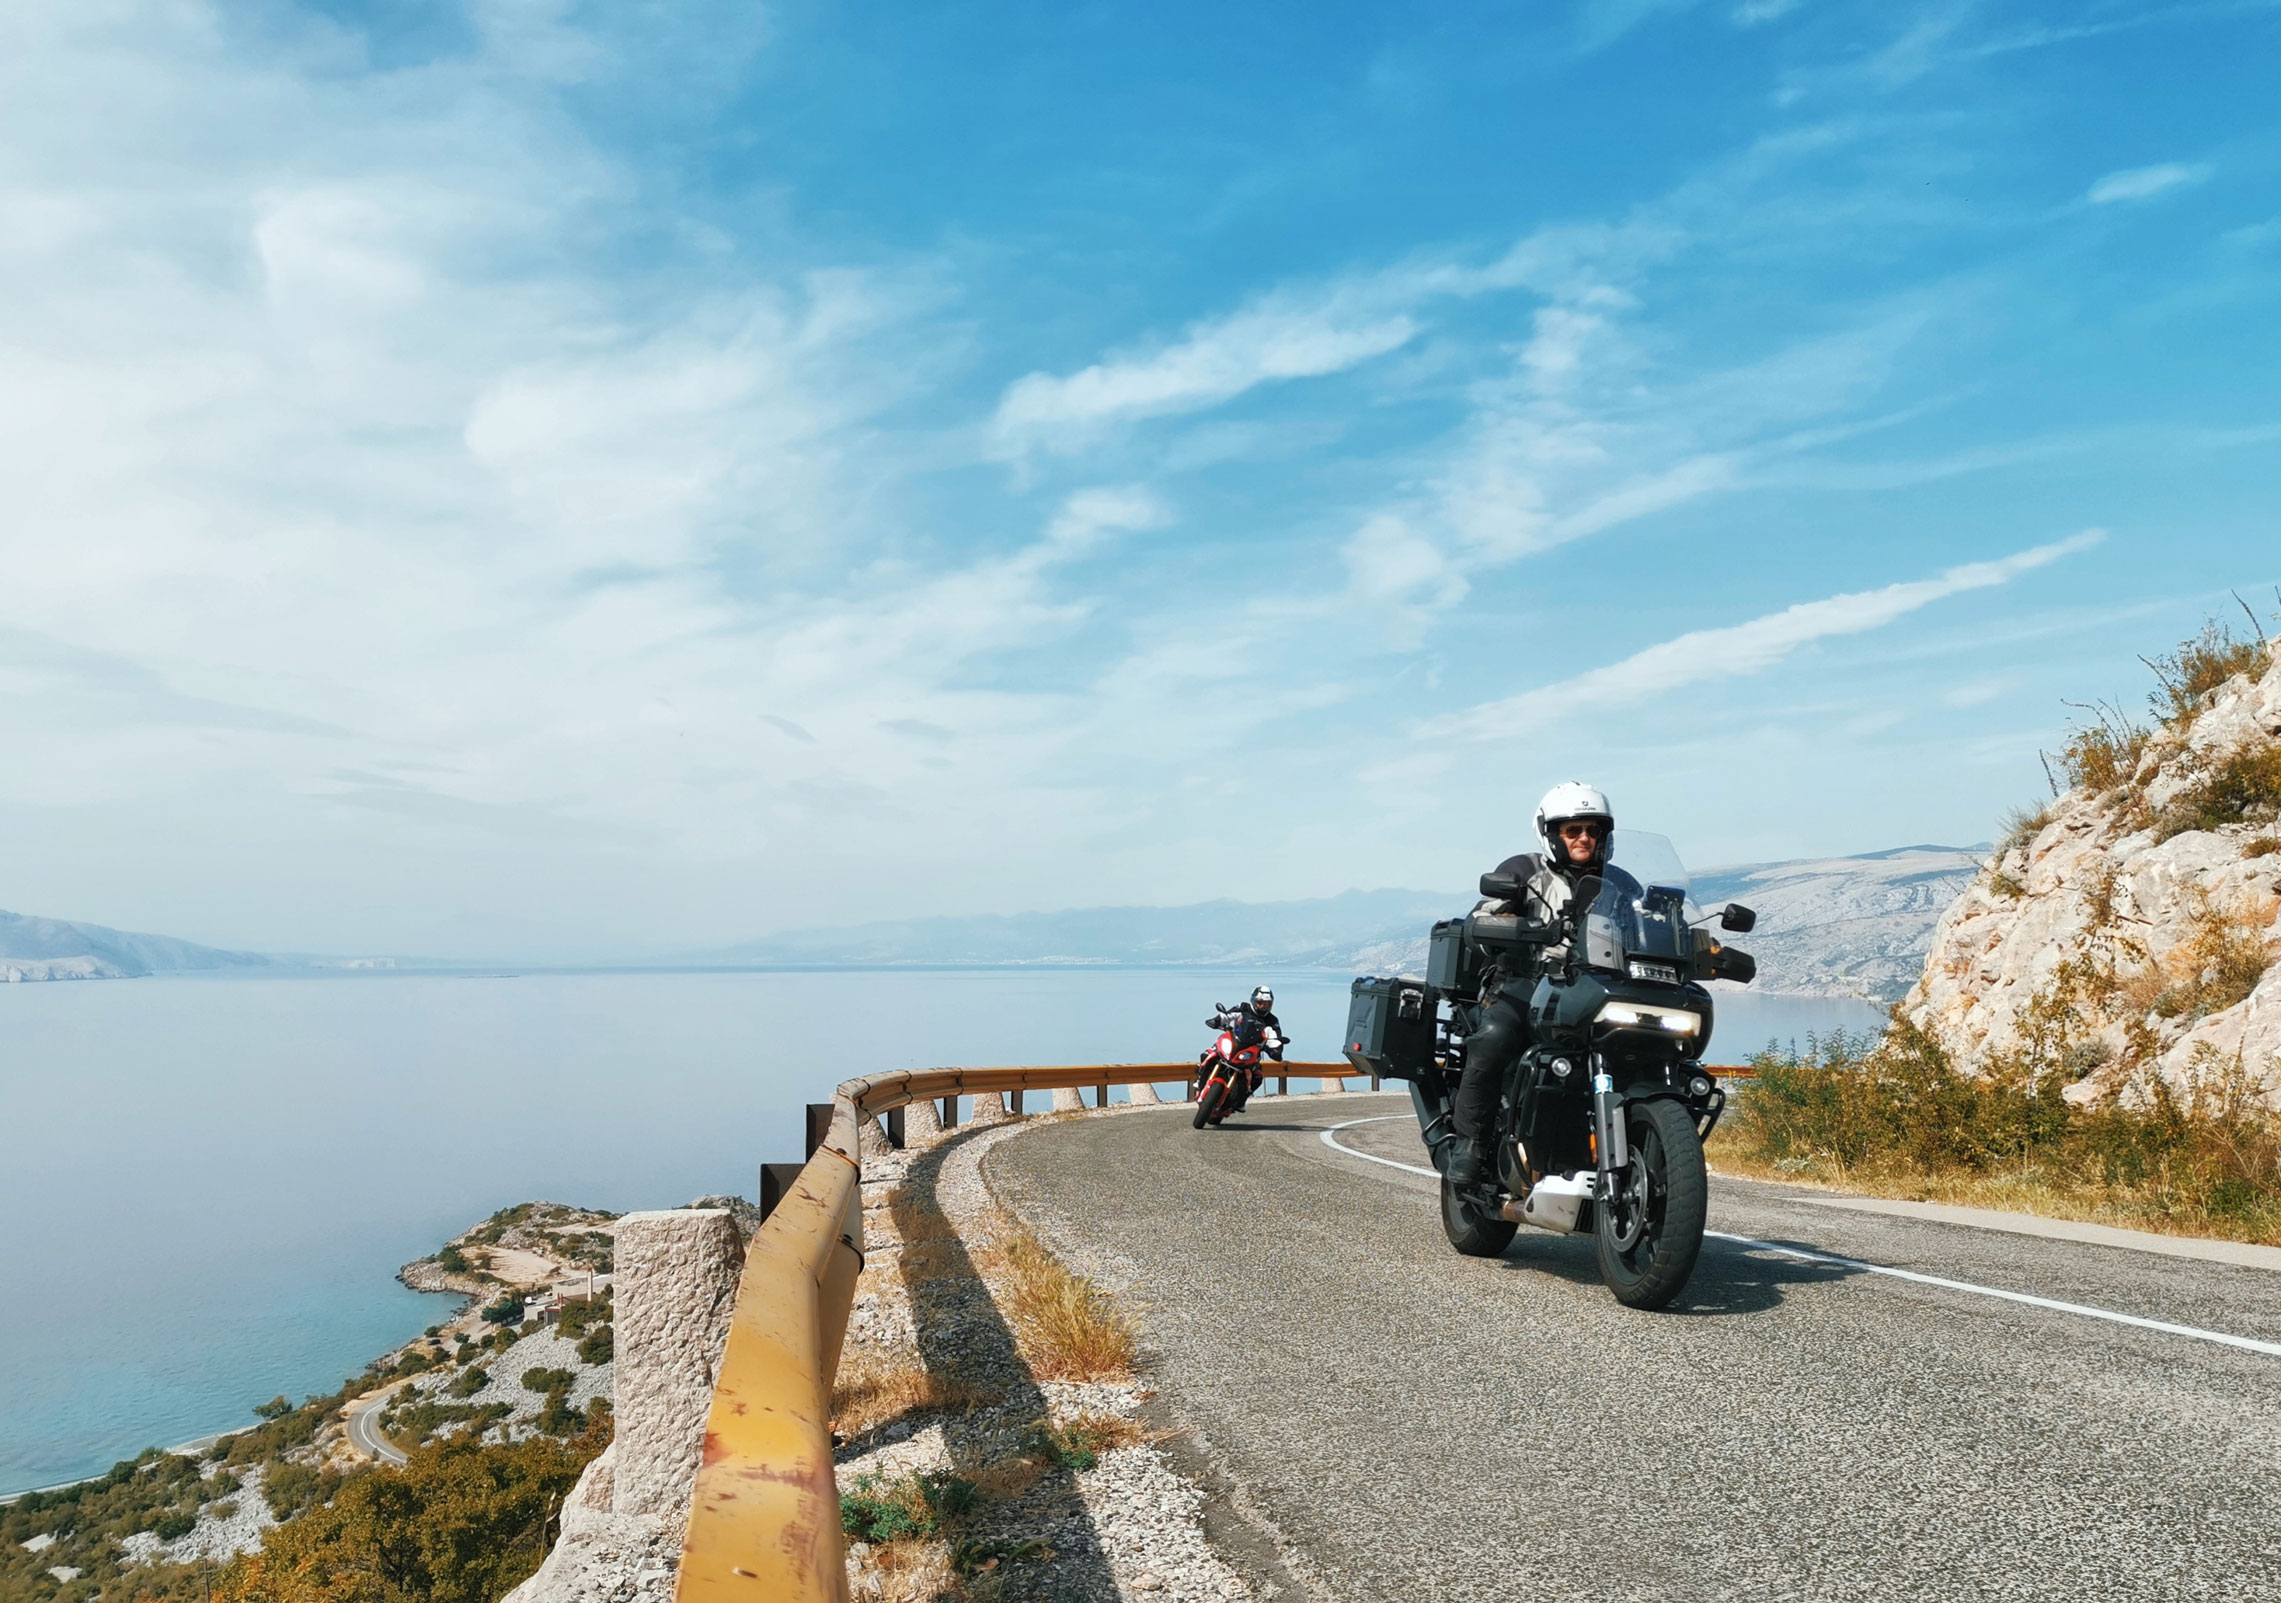 A dream ride along the Croatian coast